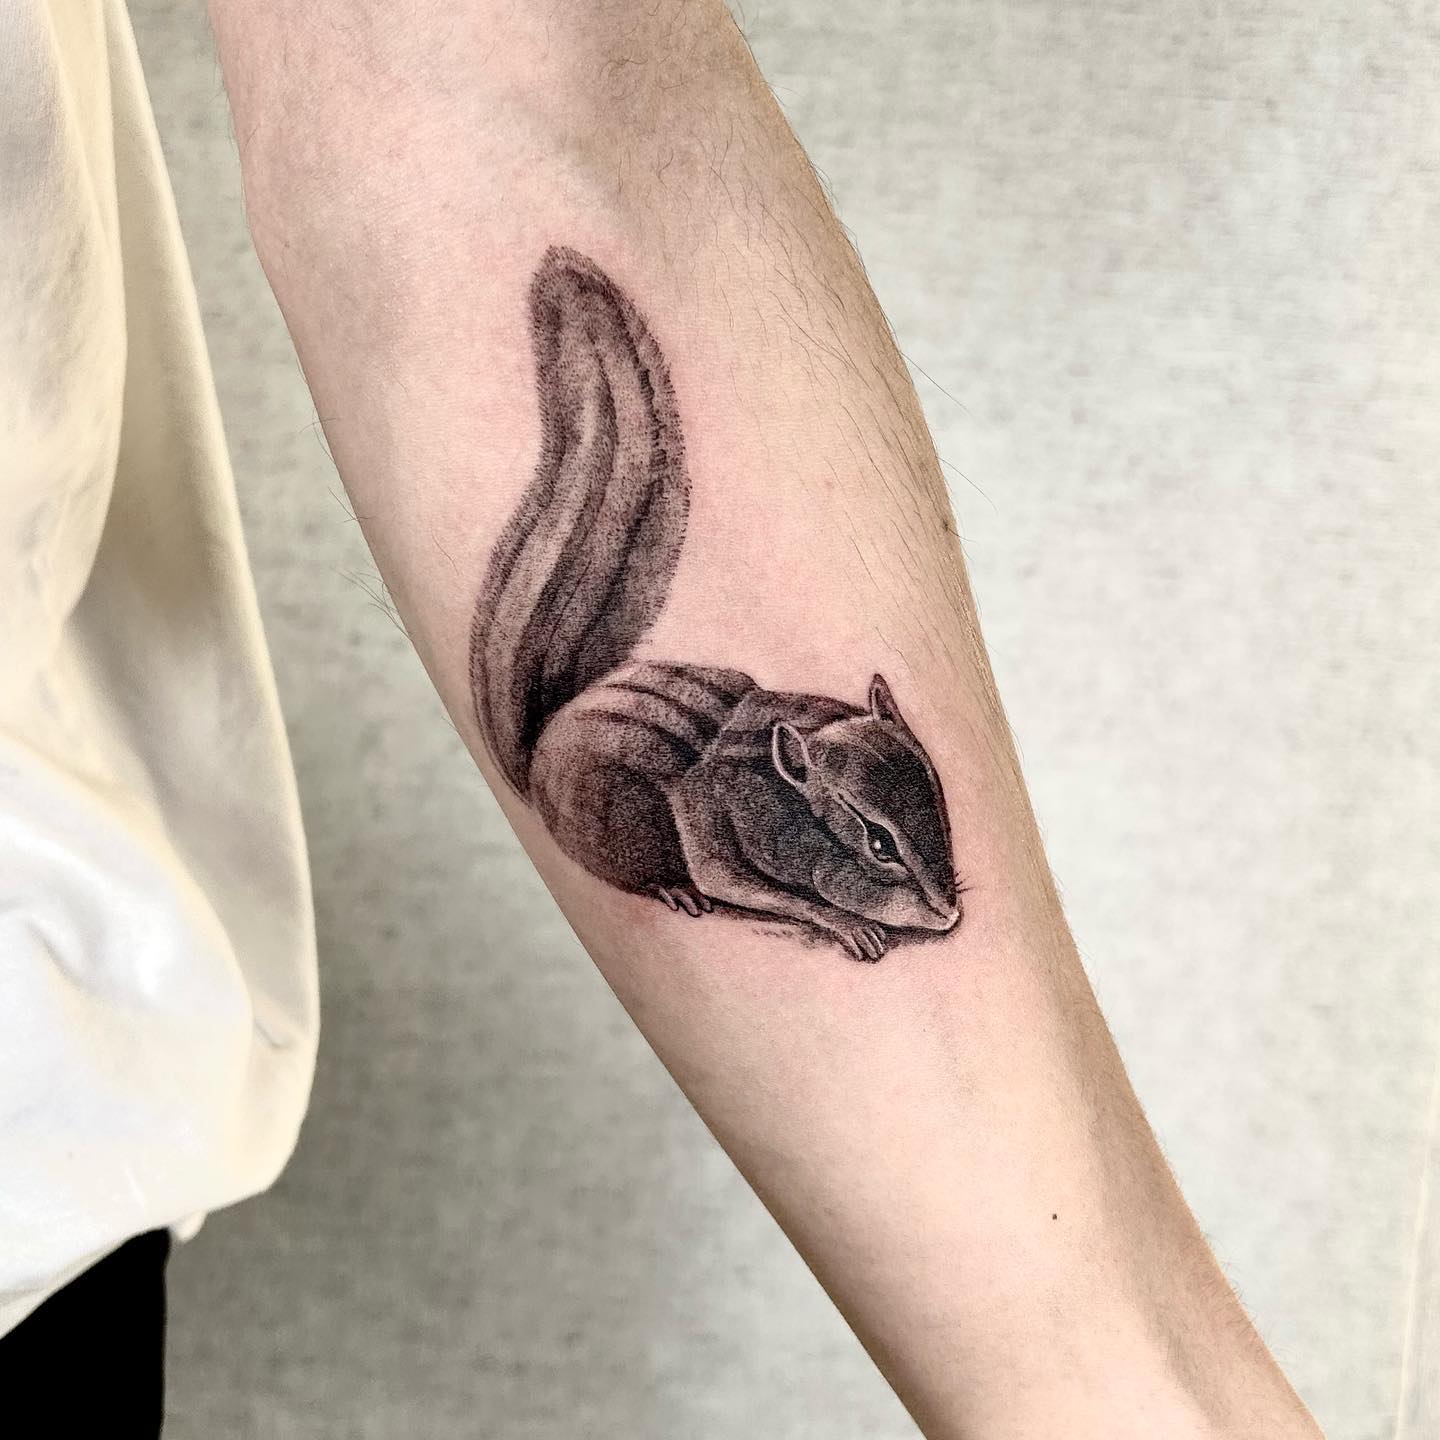 Cute squirrel tattoo by tattooer donggle